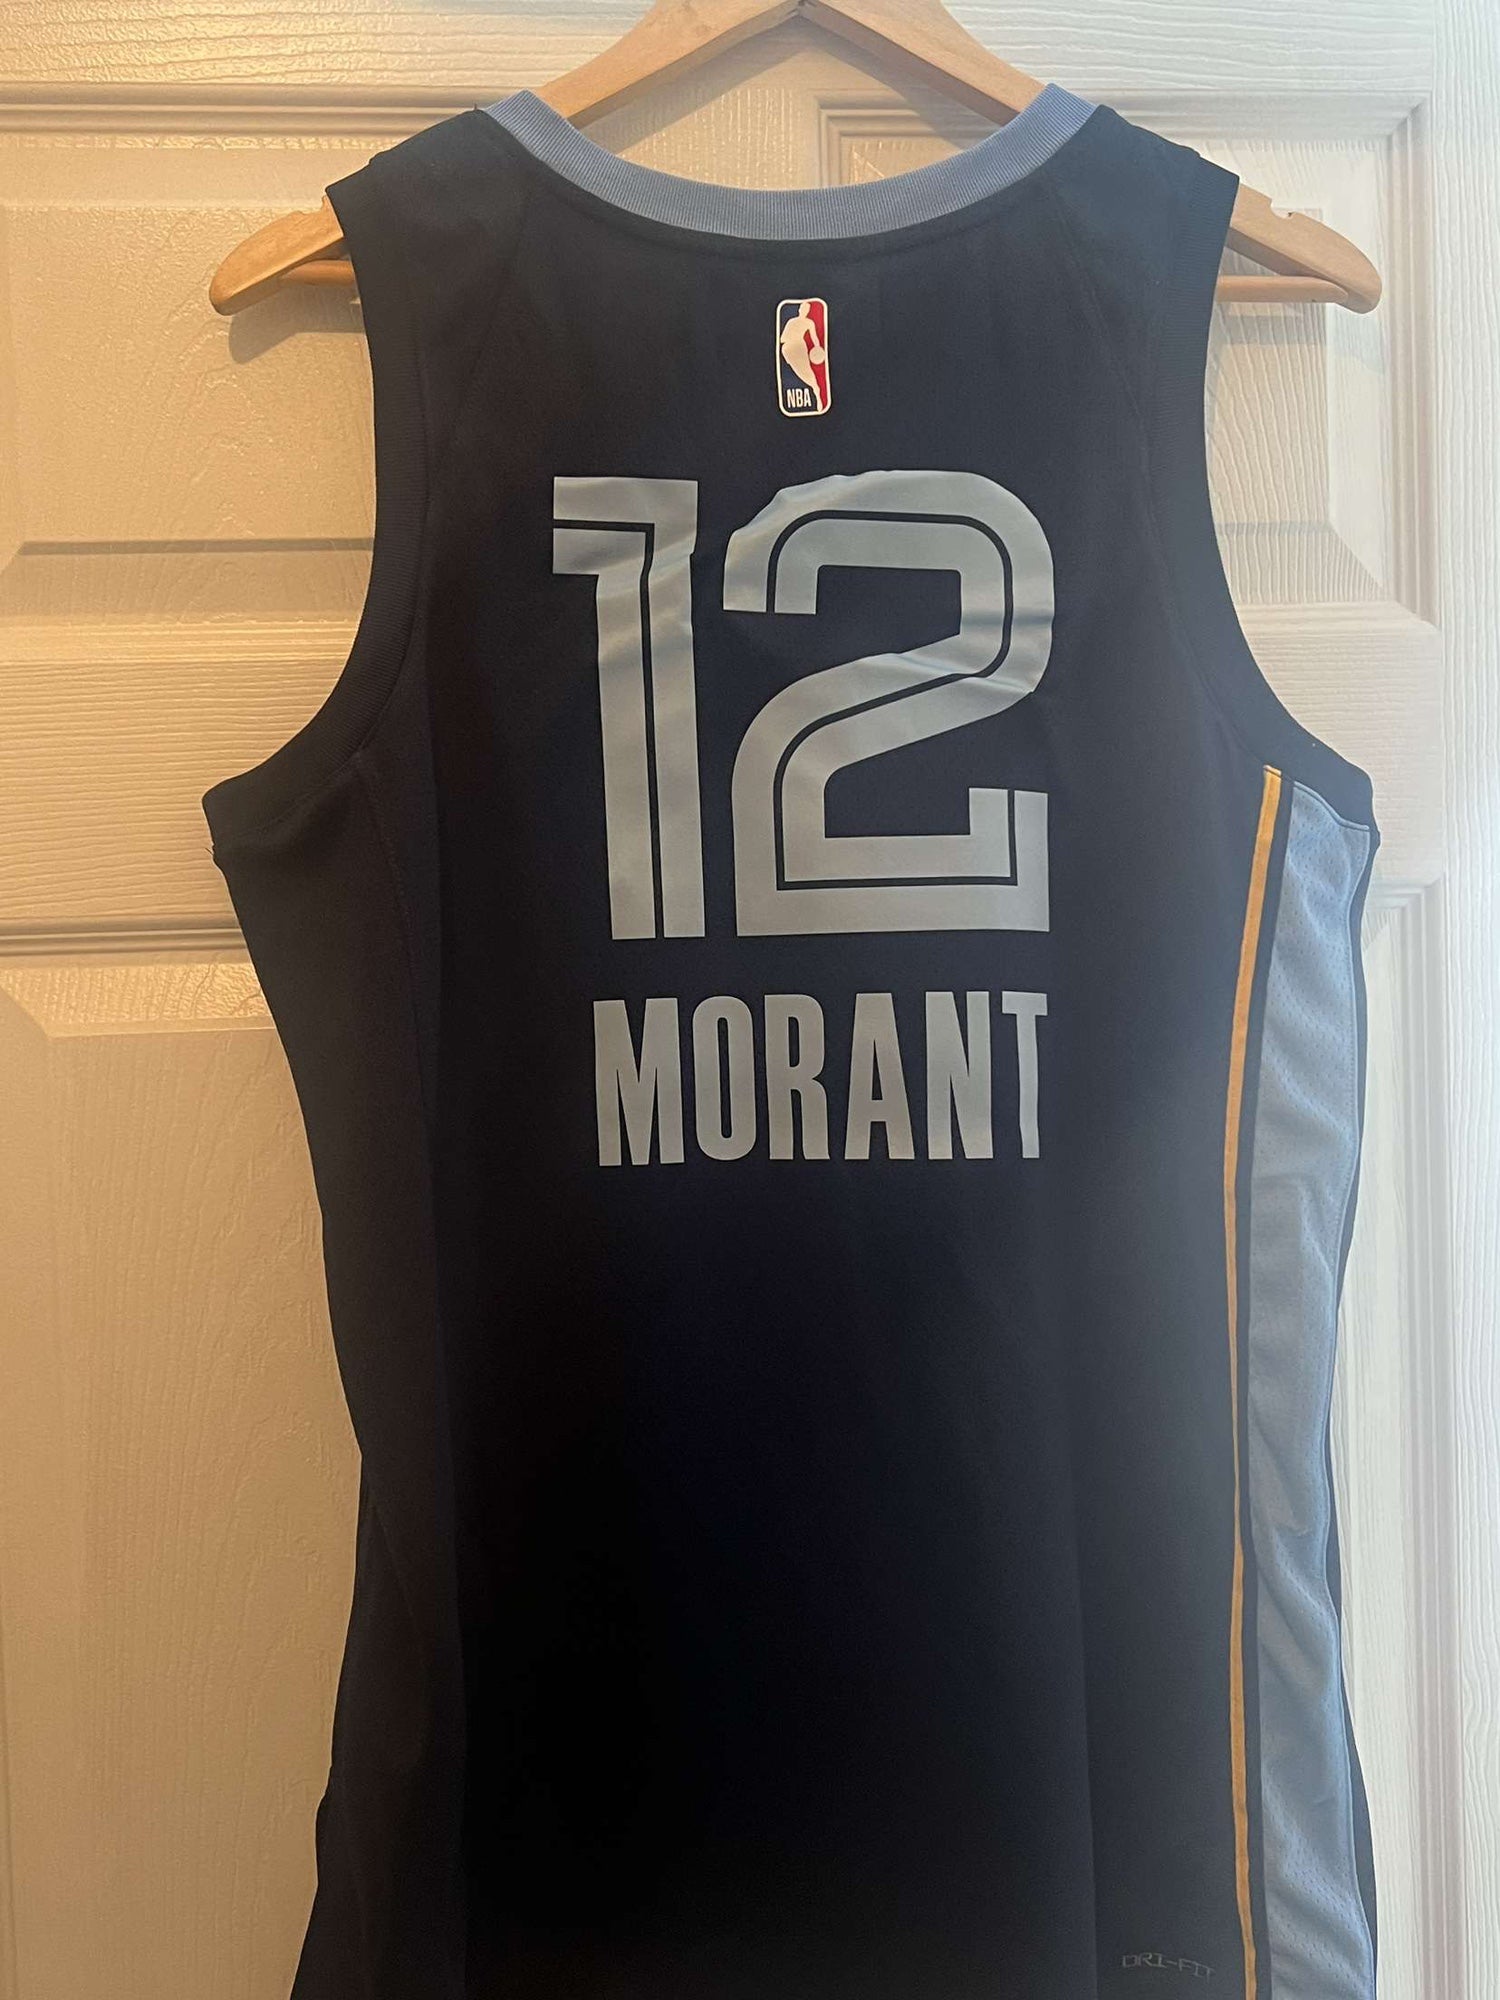 Nike Ja Morant NBA Memphis Grizzlies #12 Dri-FIT Swingman Jersey Size Large